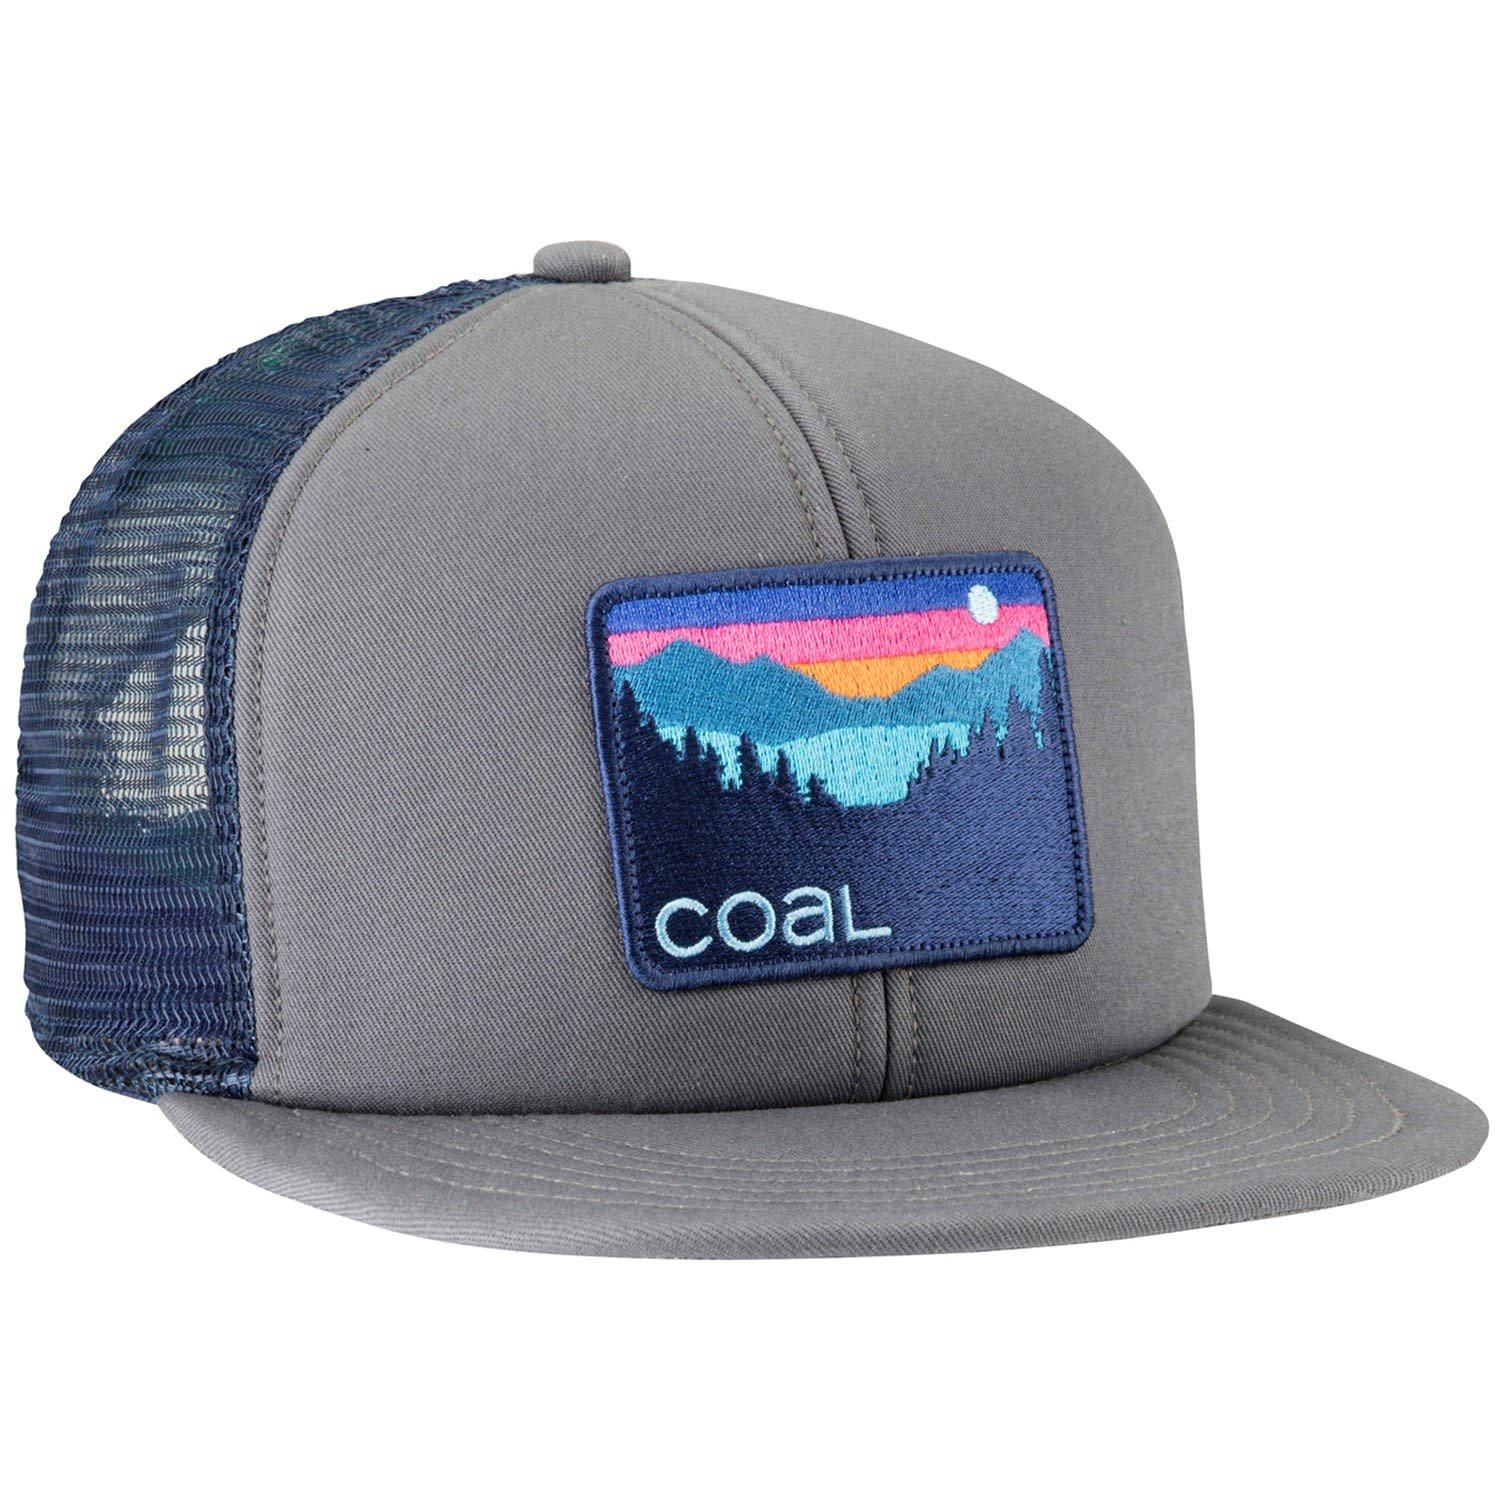 Coal Mens Hauler Trucker Hat